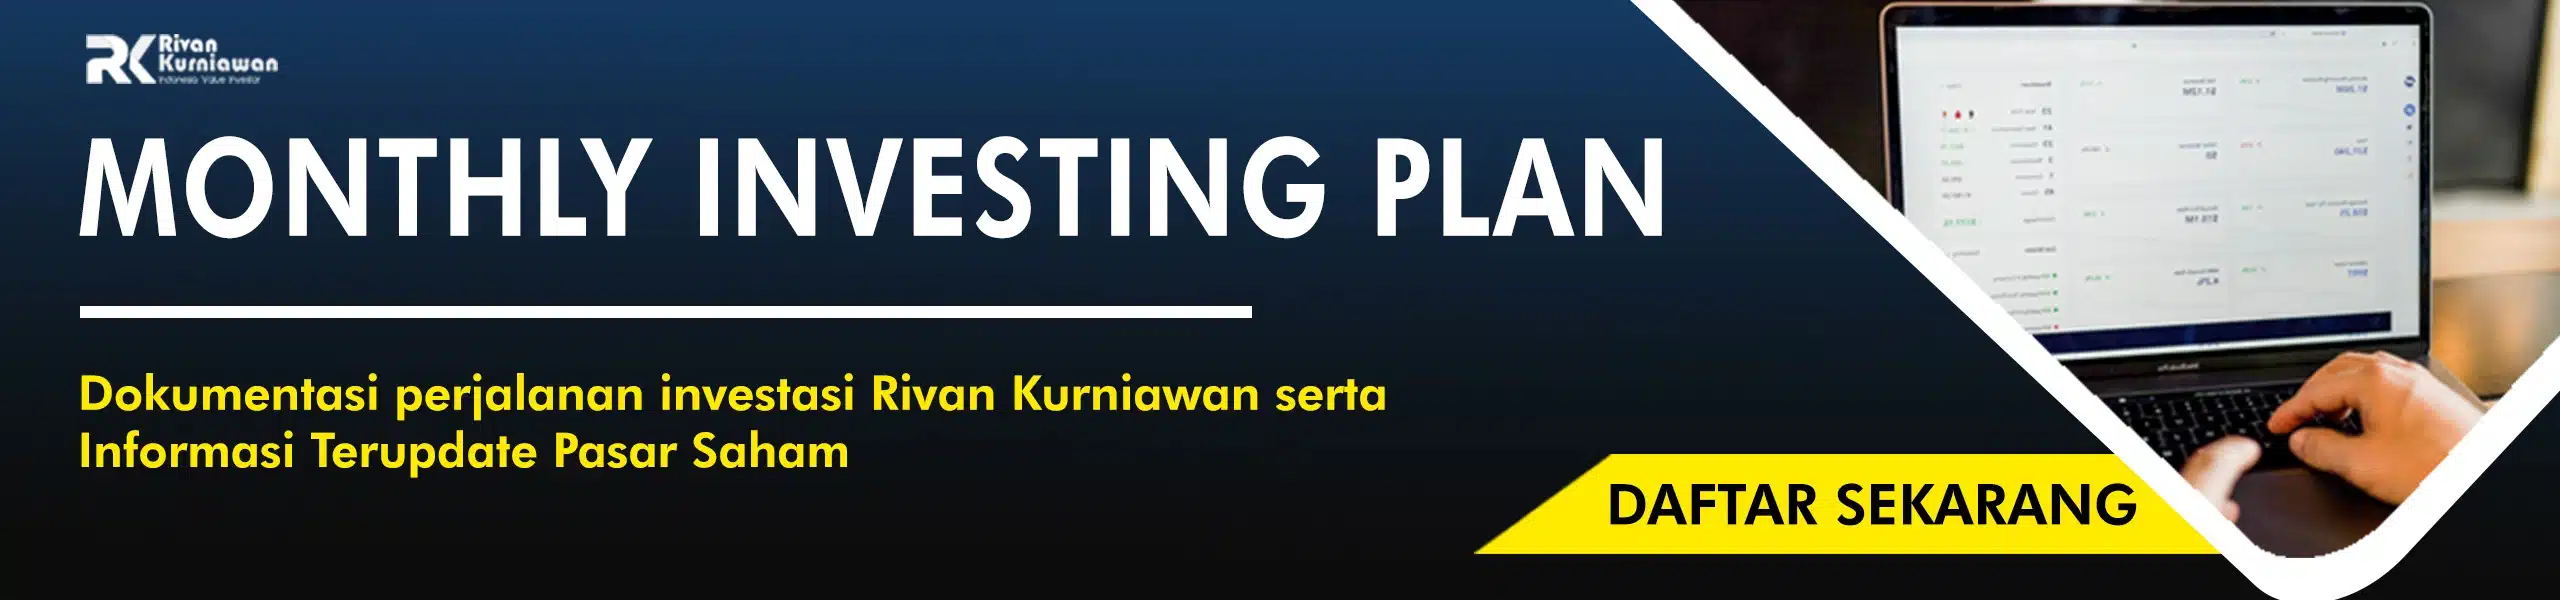 Monthly Investing Rivan Kurniawan